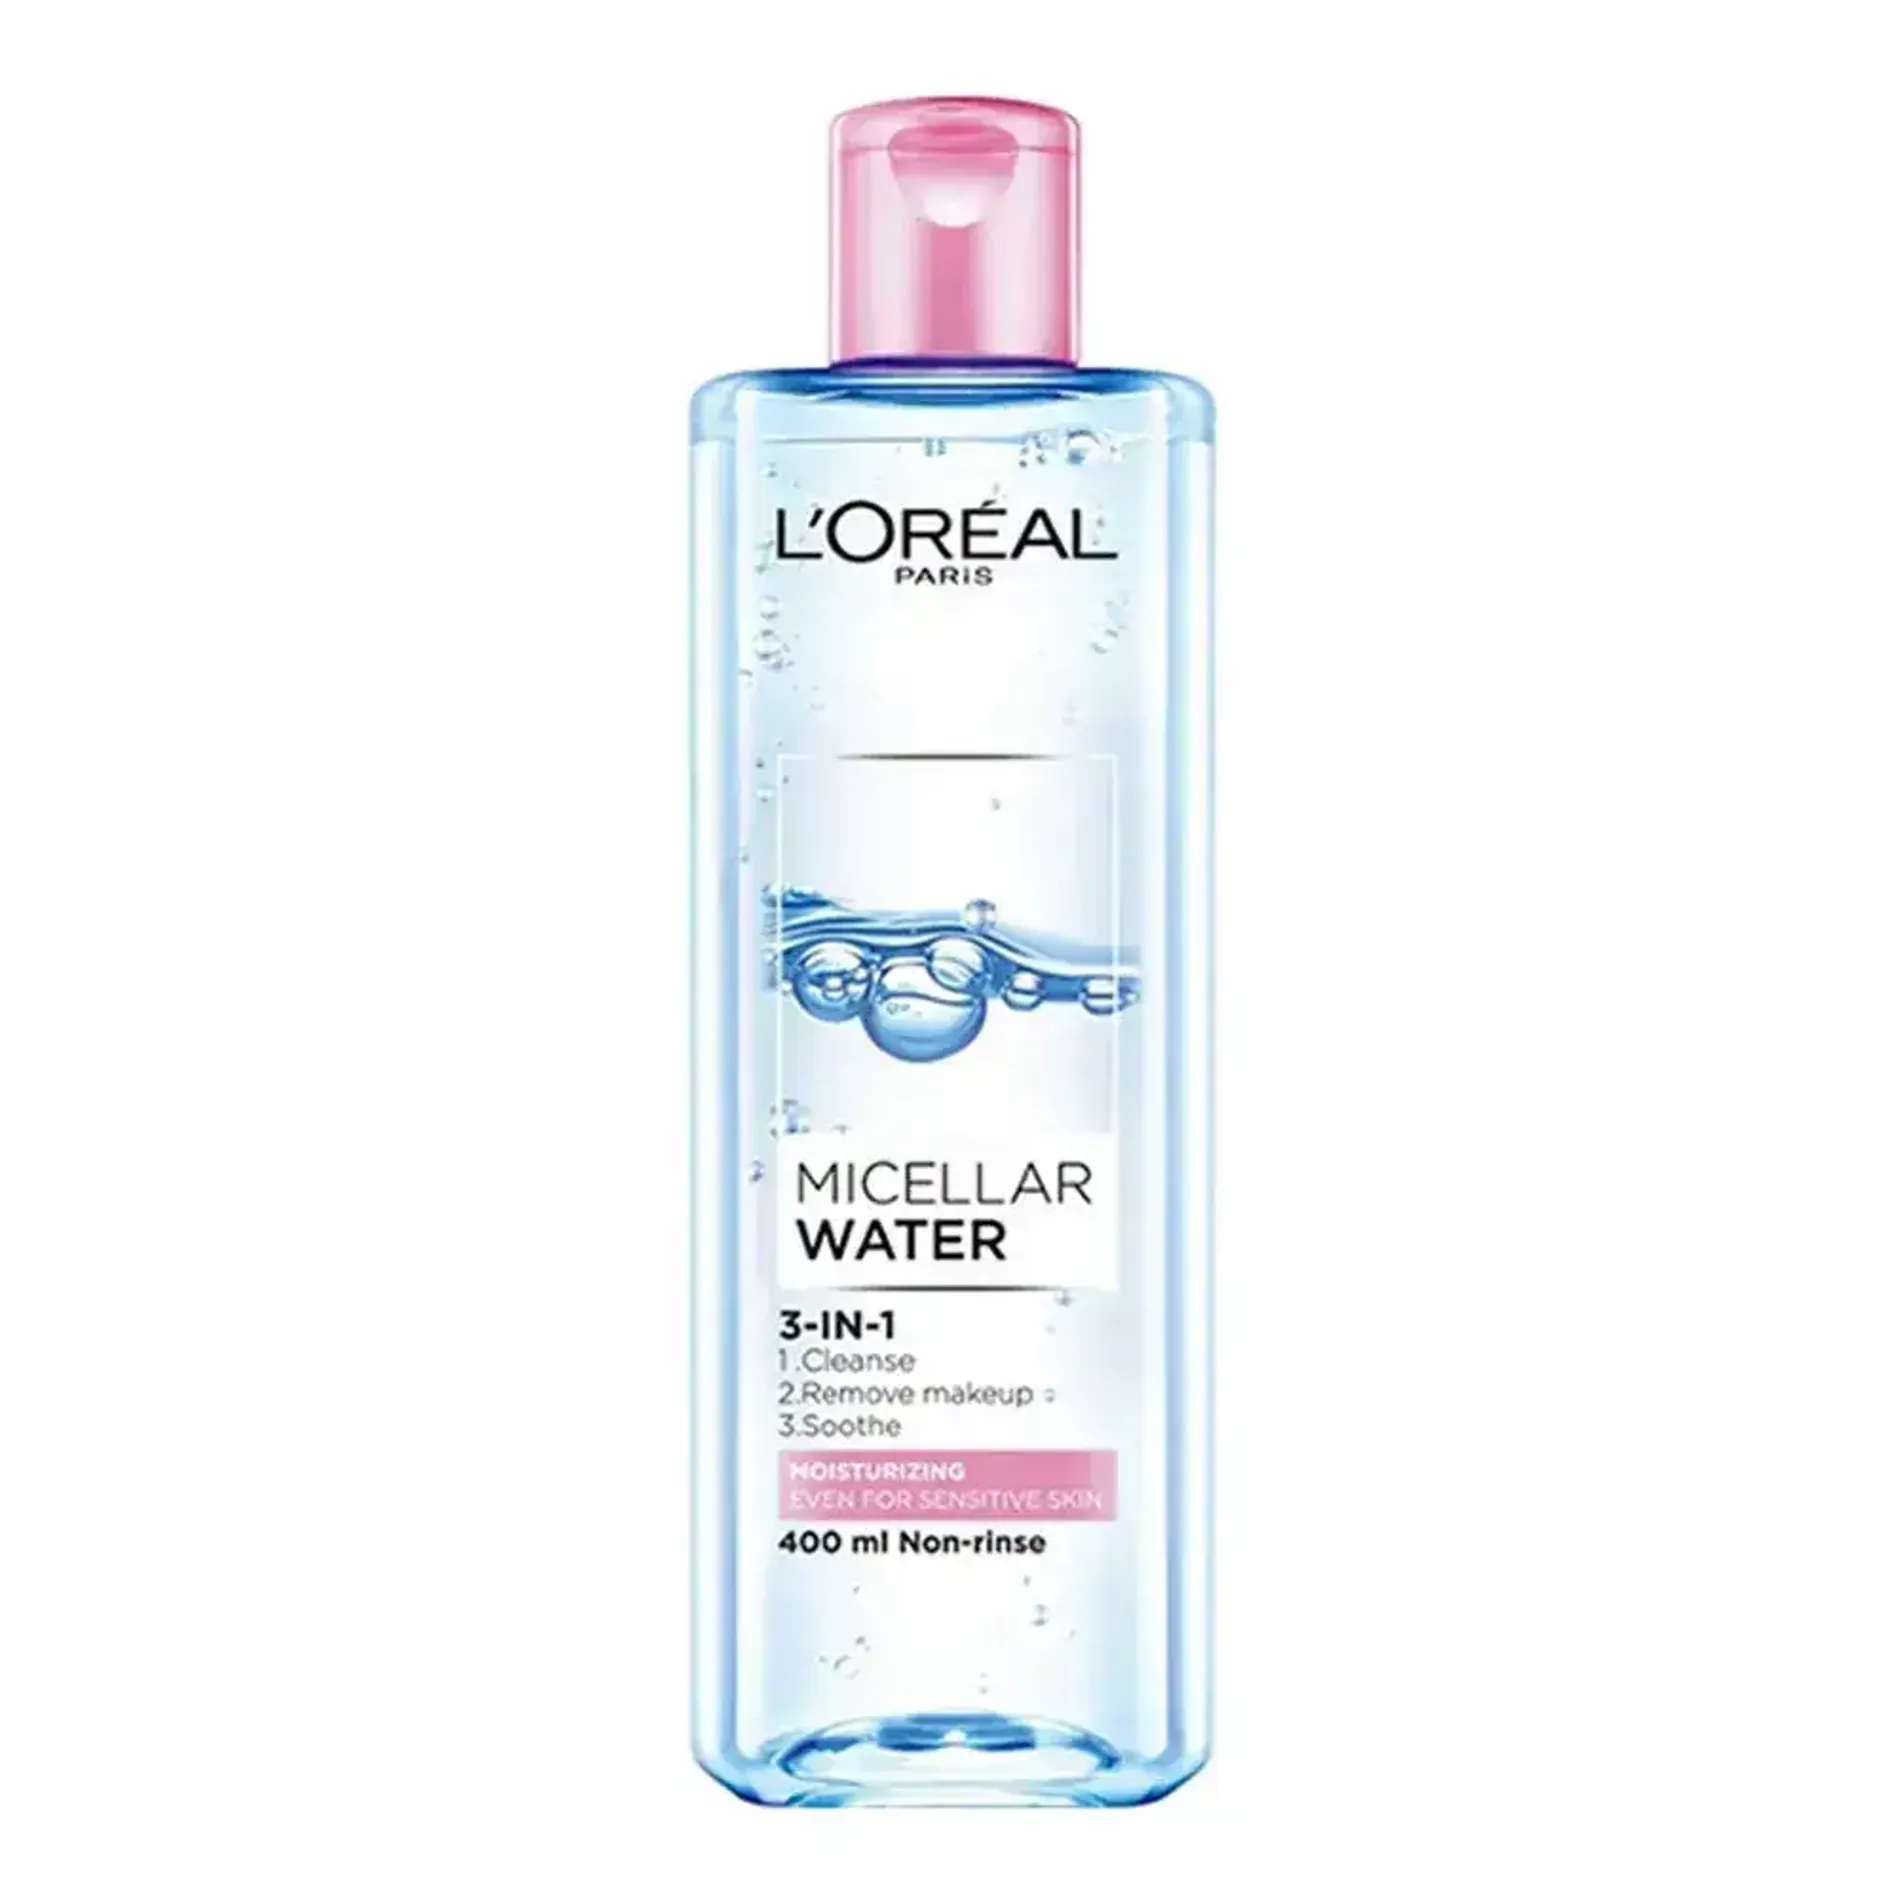 nuoc-tay-trang-cap-am-l-oreal-micellar-water-moisturizing-even-for-sensitive-skin-1